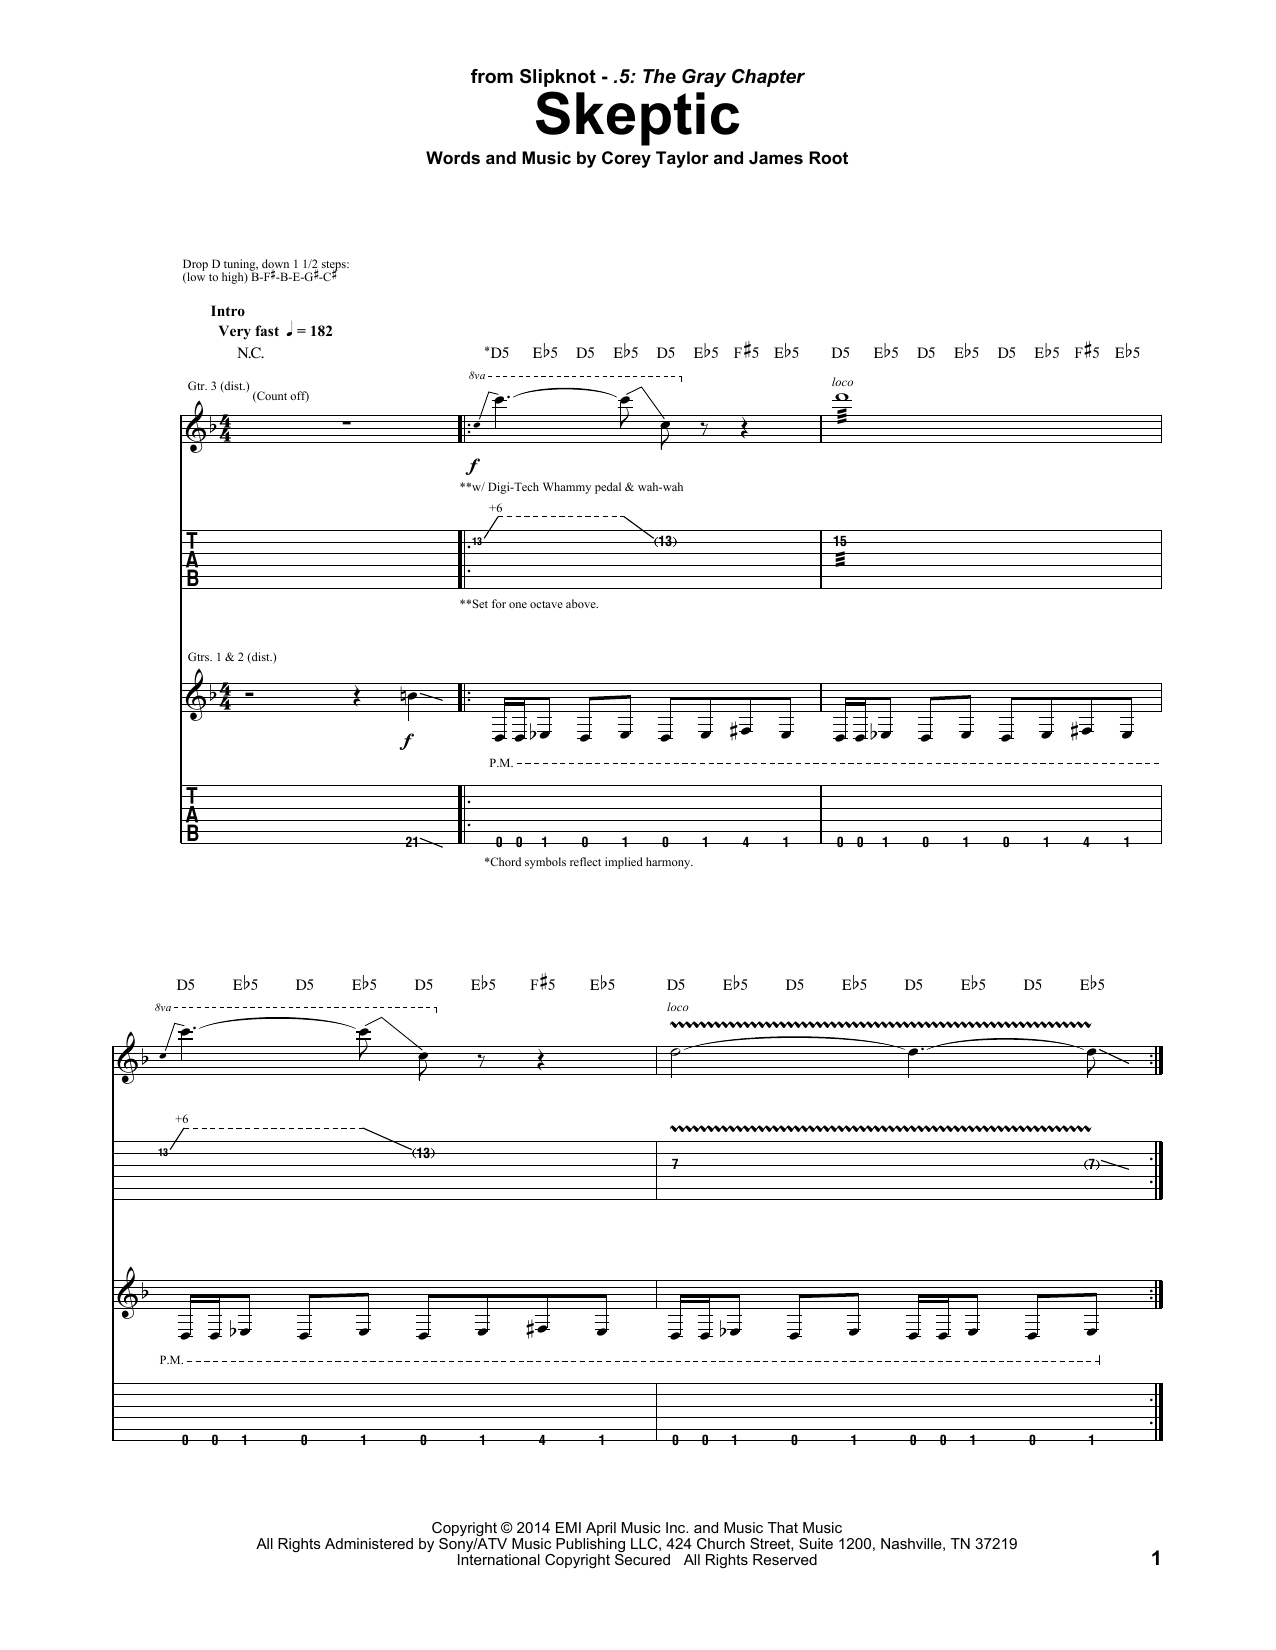 Slipknot Skeptic Sheet Music Notes & Chords for Guitar Tab - Download or Print PDF